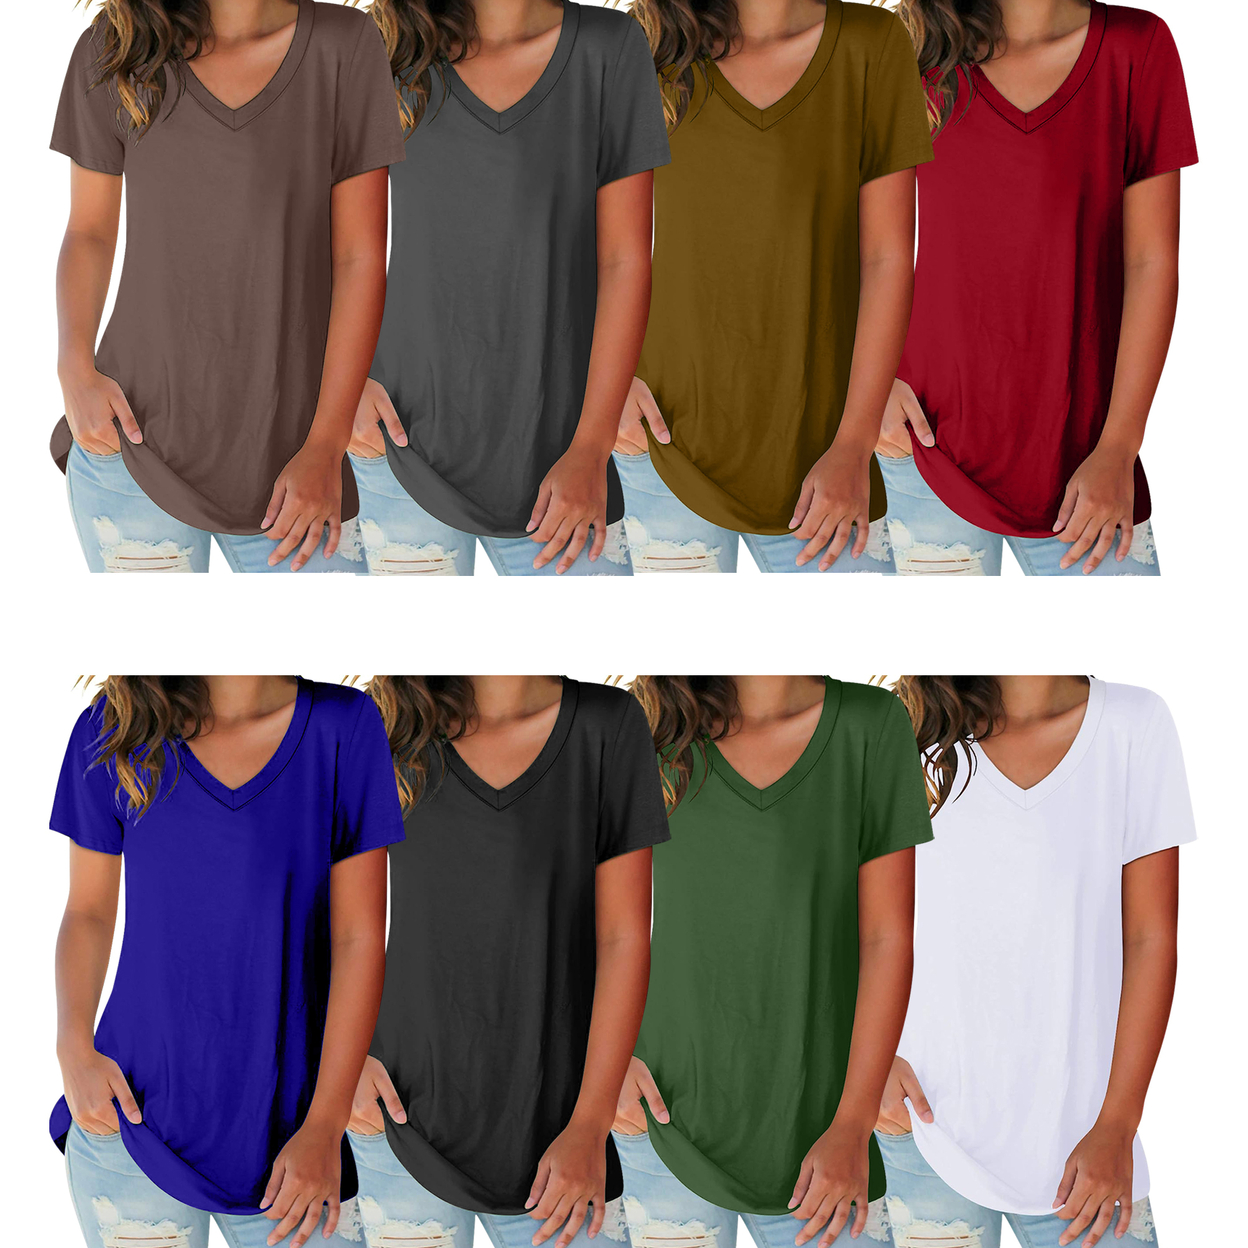 Women's Ultra-Soft Smooth Cotton Blend Basic V-Neck Short Sleeve Shirts - Black, Small